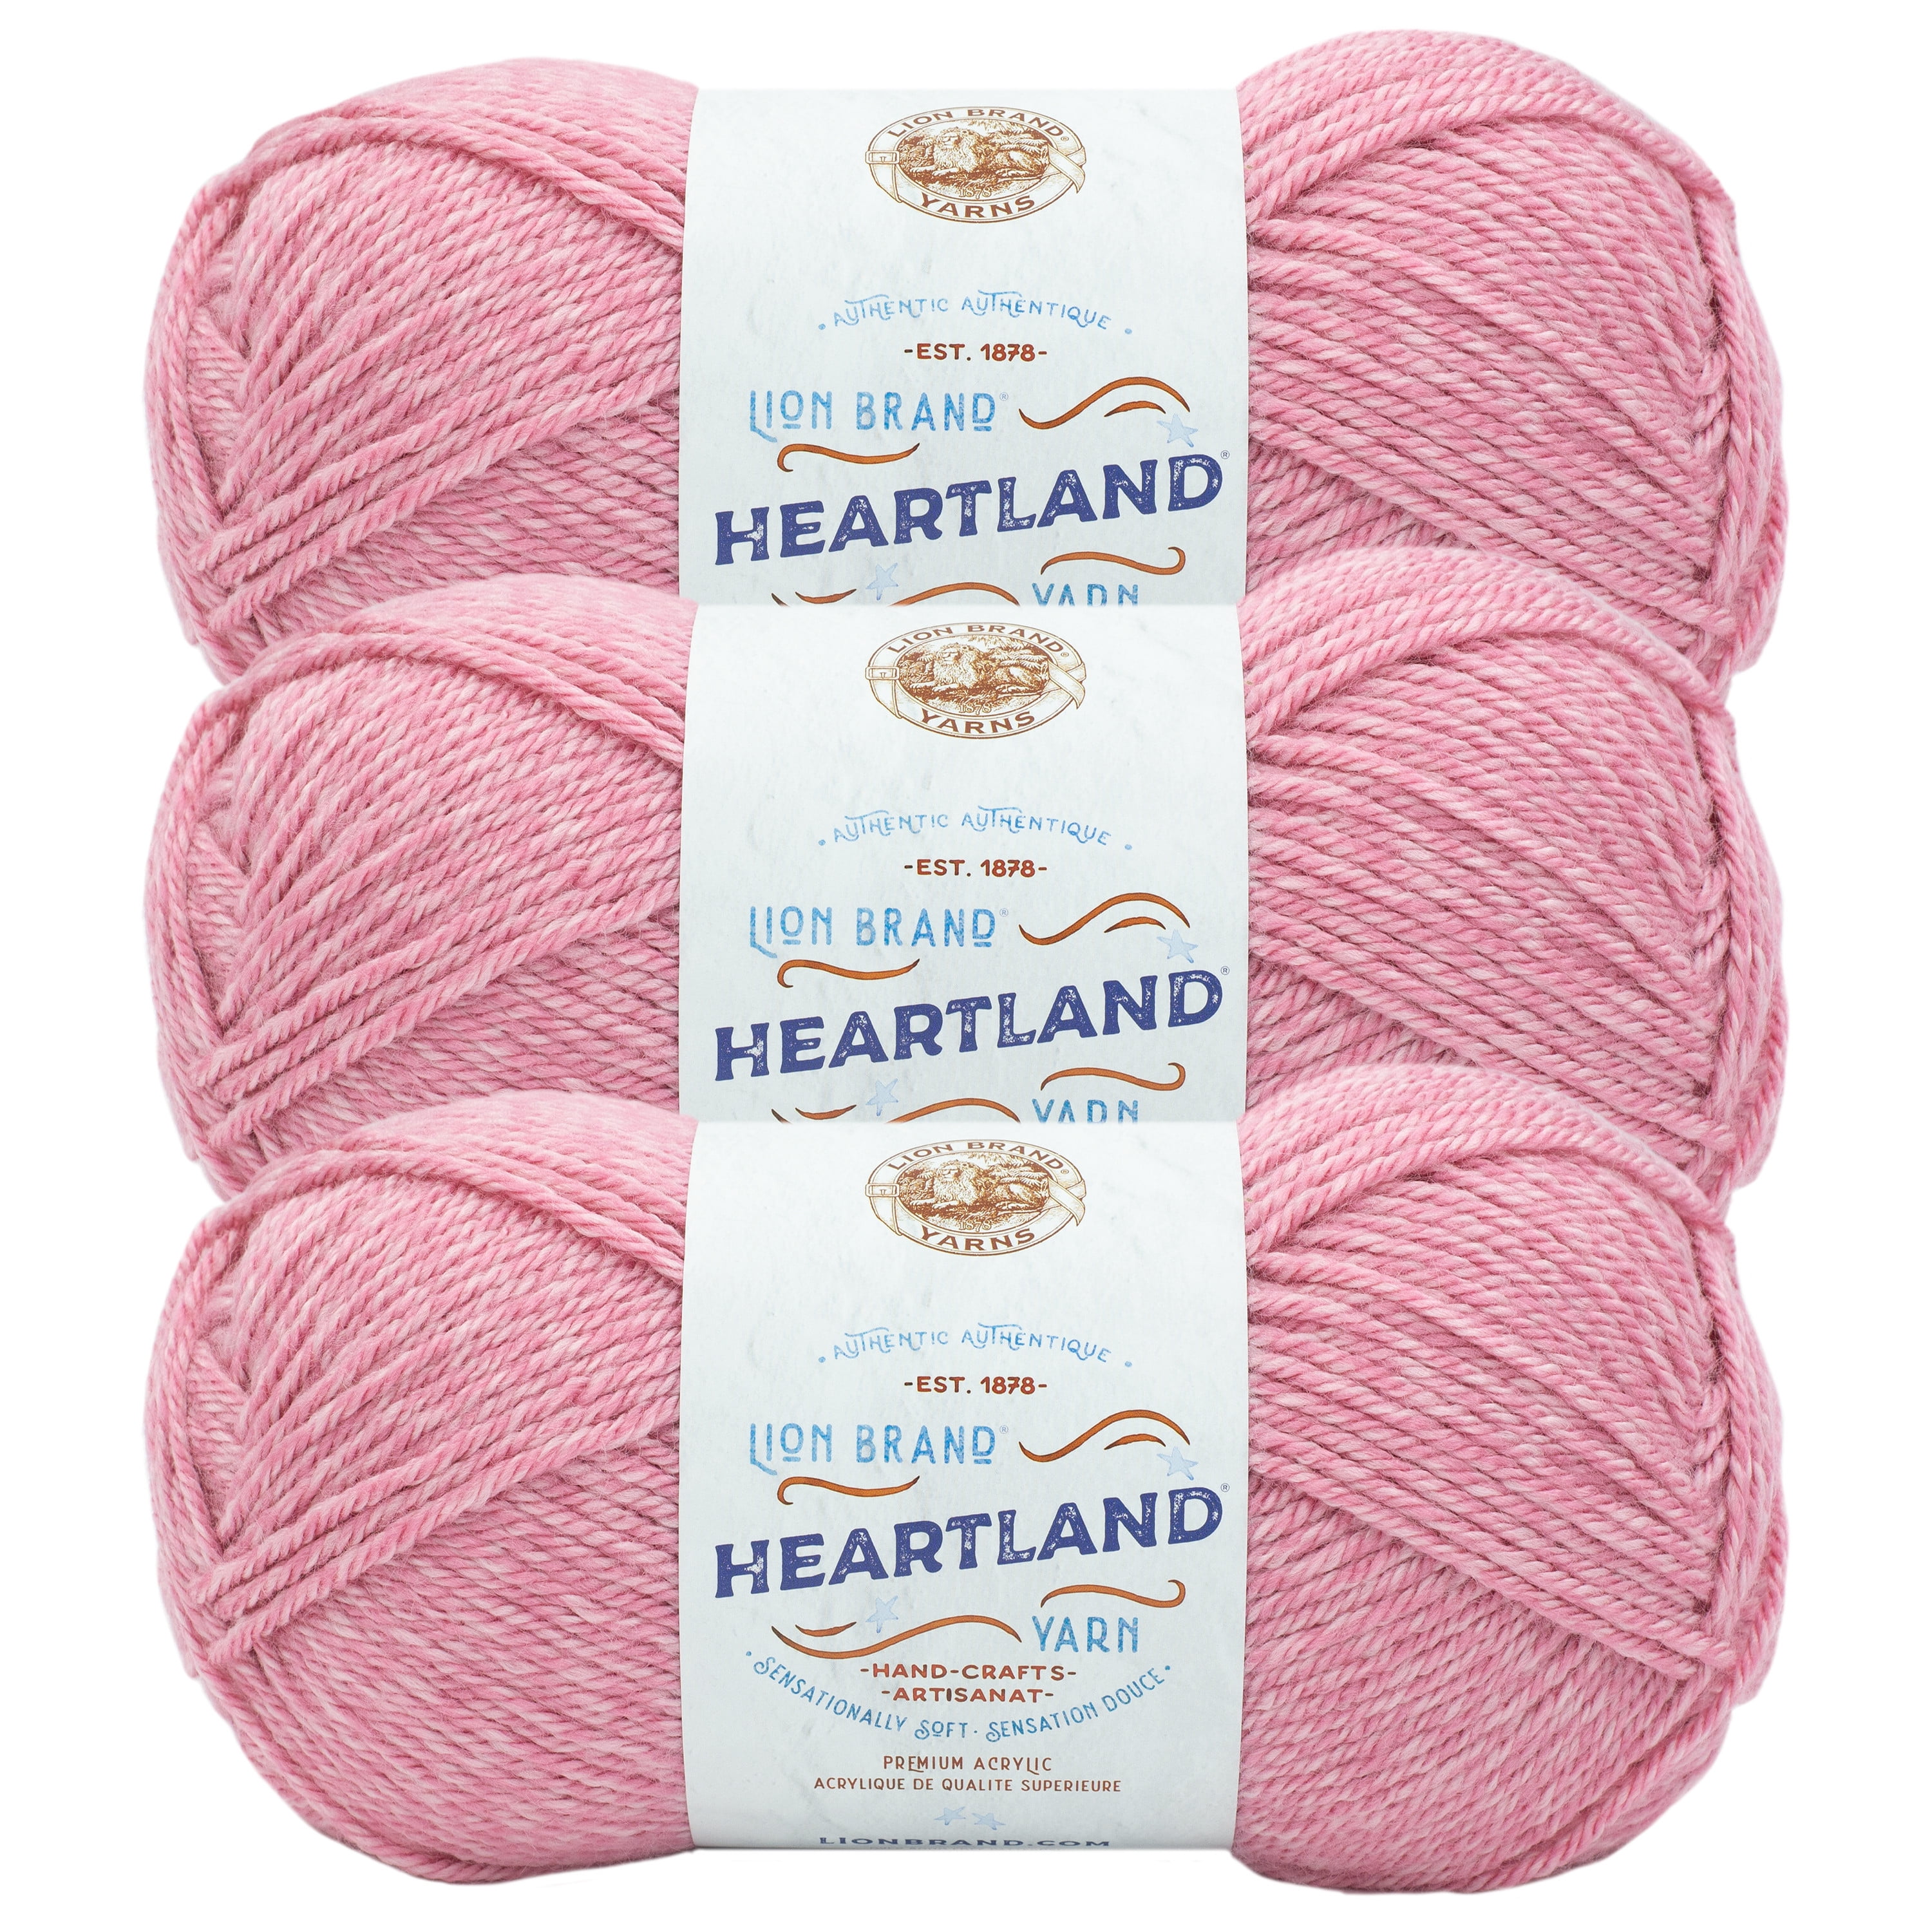 Heartland Yarn 3 in Indiana Dunes, Super Soft Yarn for Cosplay